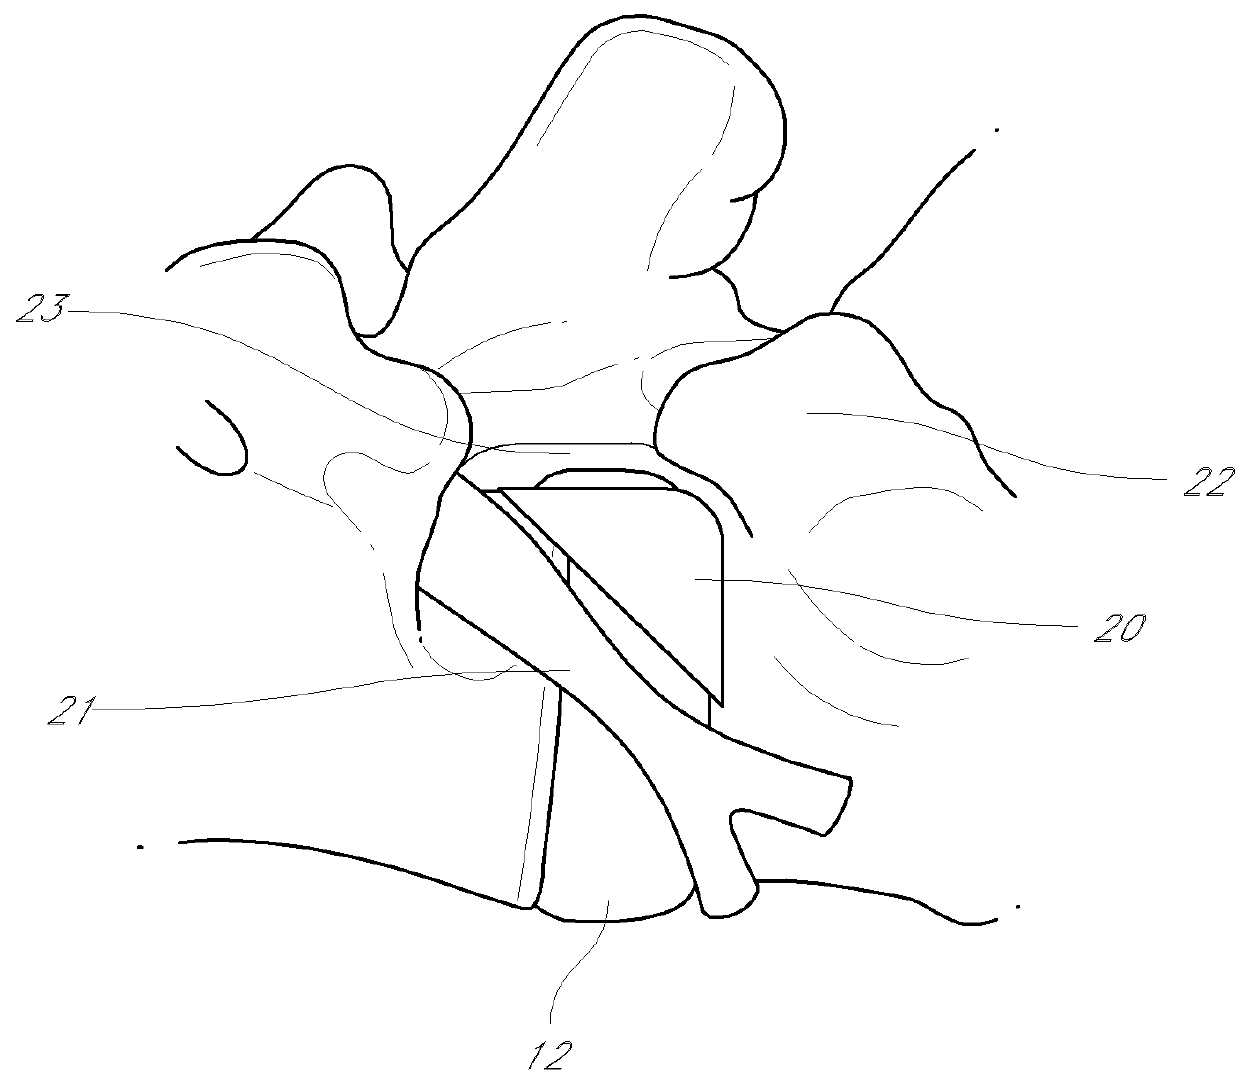 Method and apparatus for minimally invasive insertion of intervertebral implants